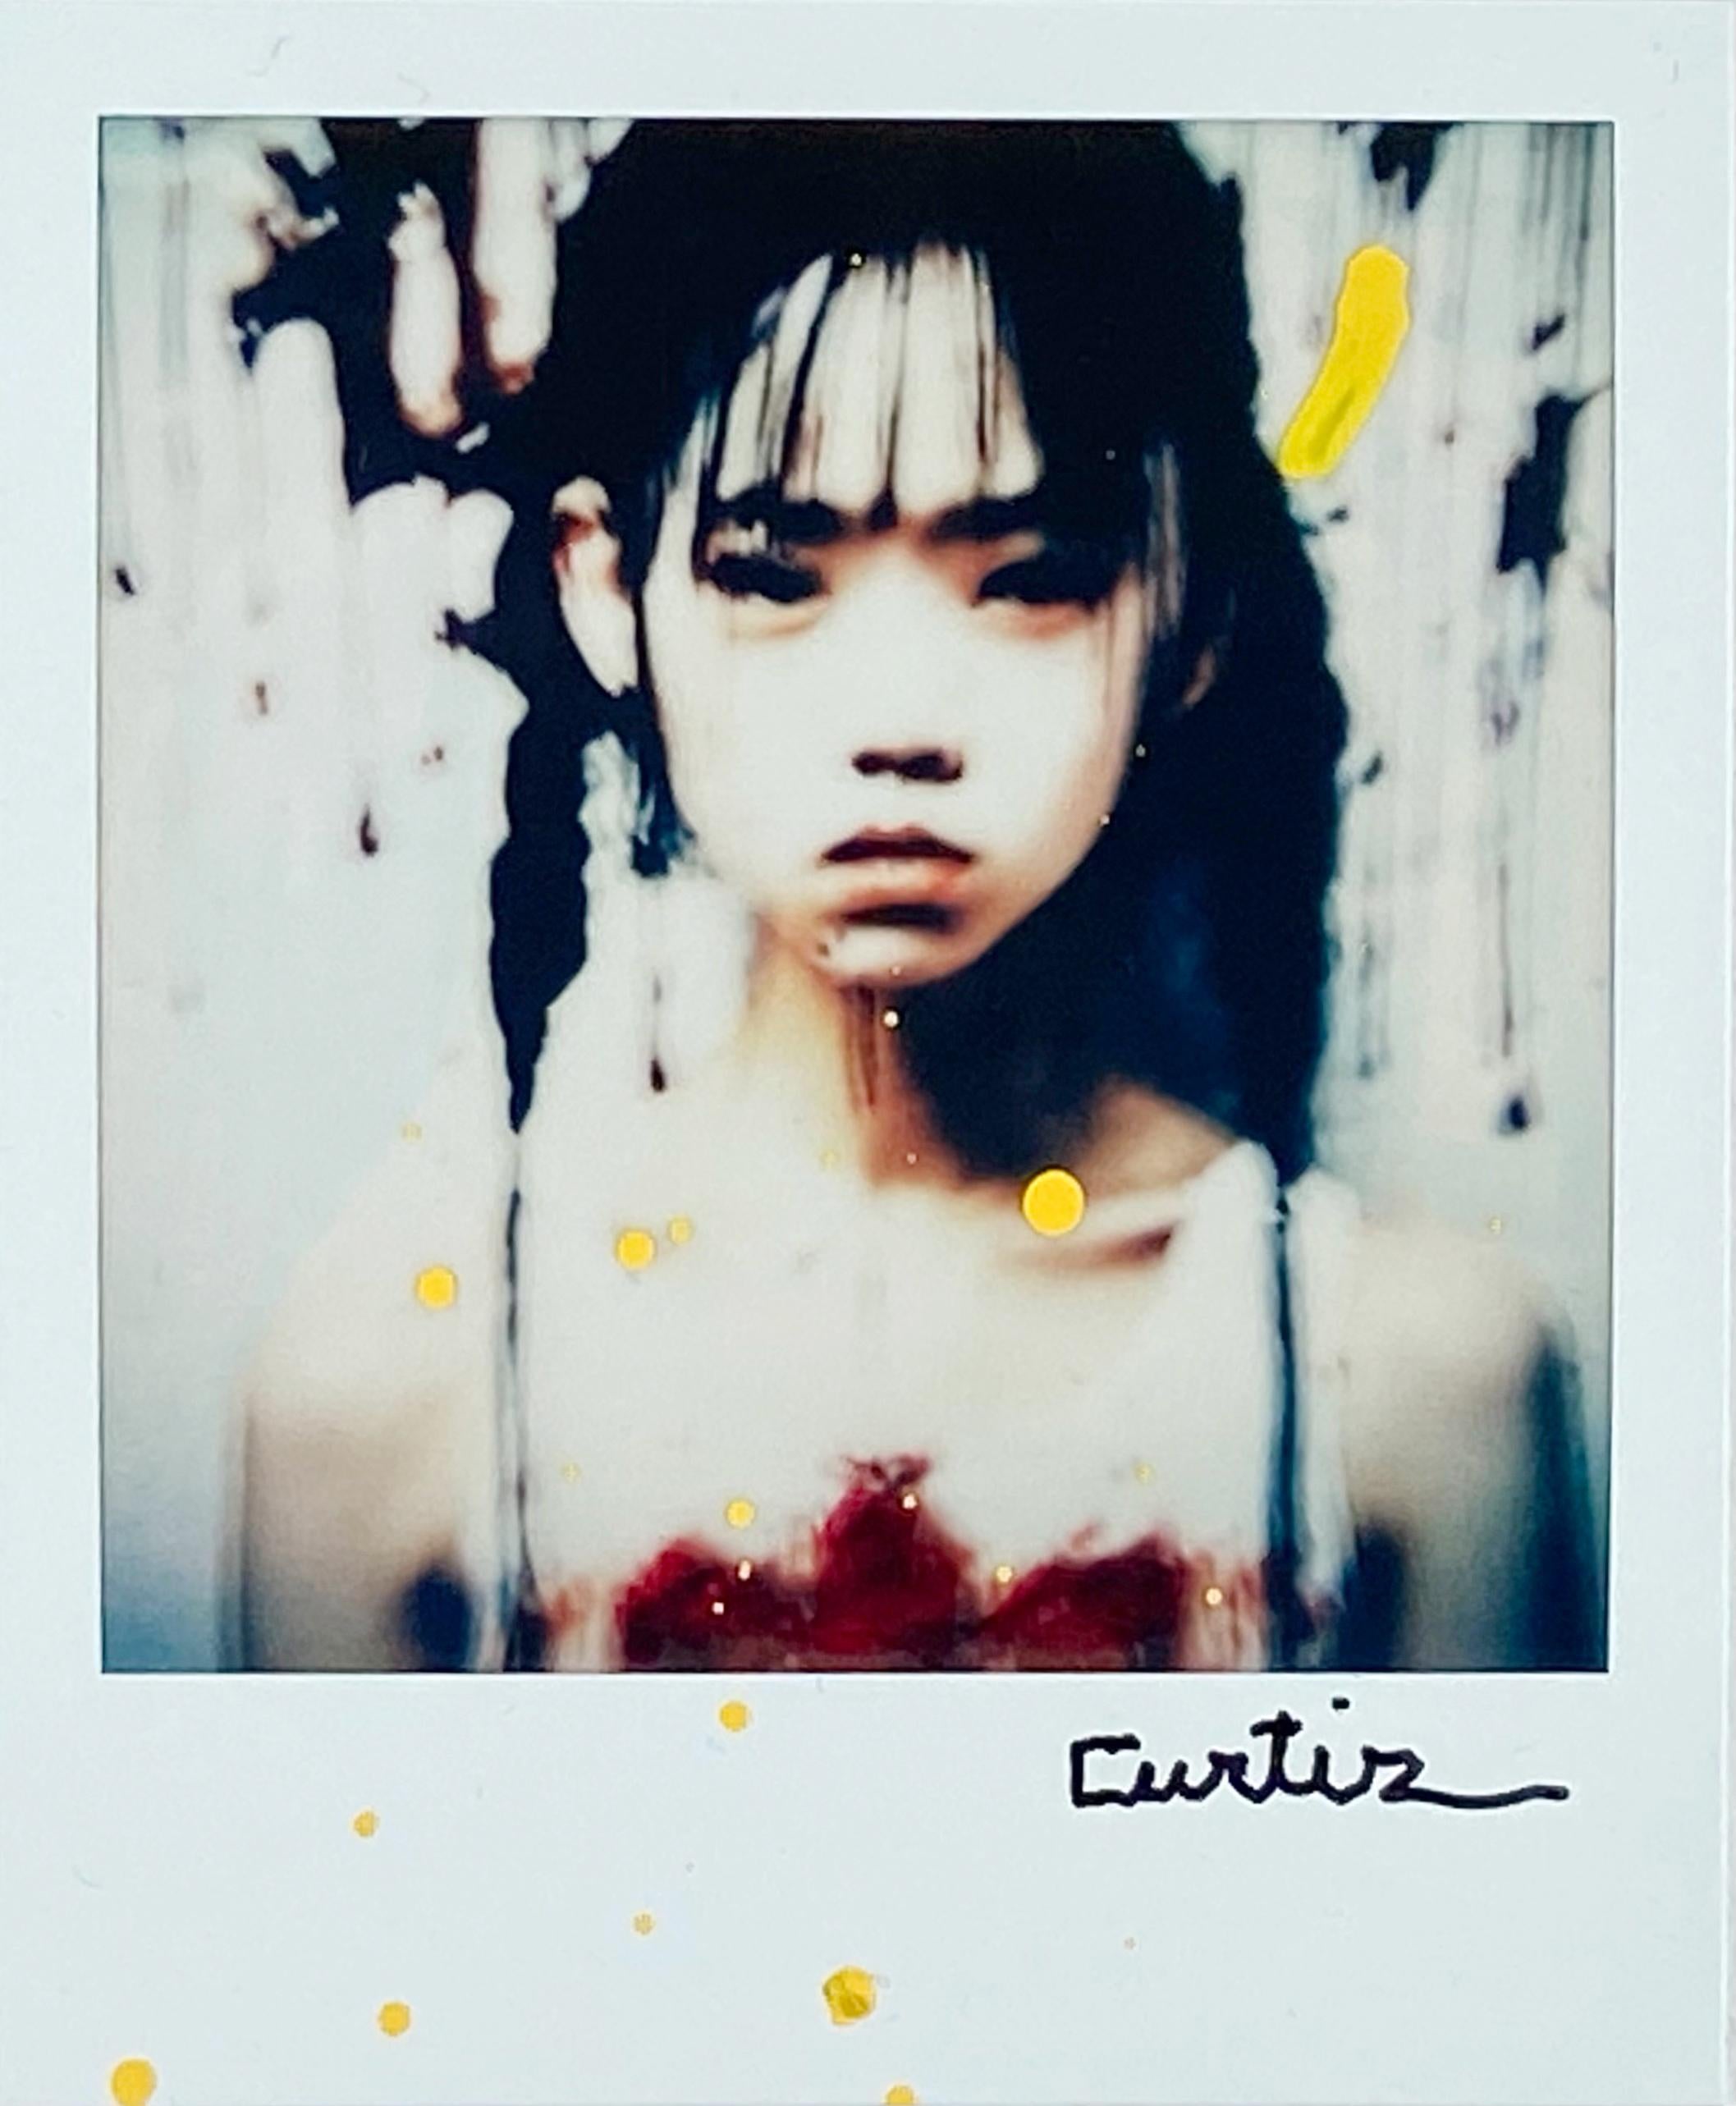 Curtiz Color Photograph - The Beef Sisters - Mika - Unique Polaroids - Contemporary, Youth, Photograph